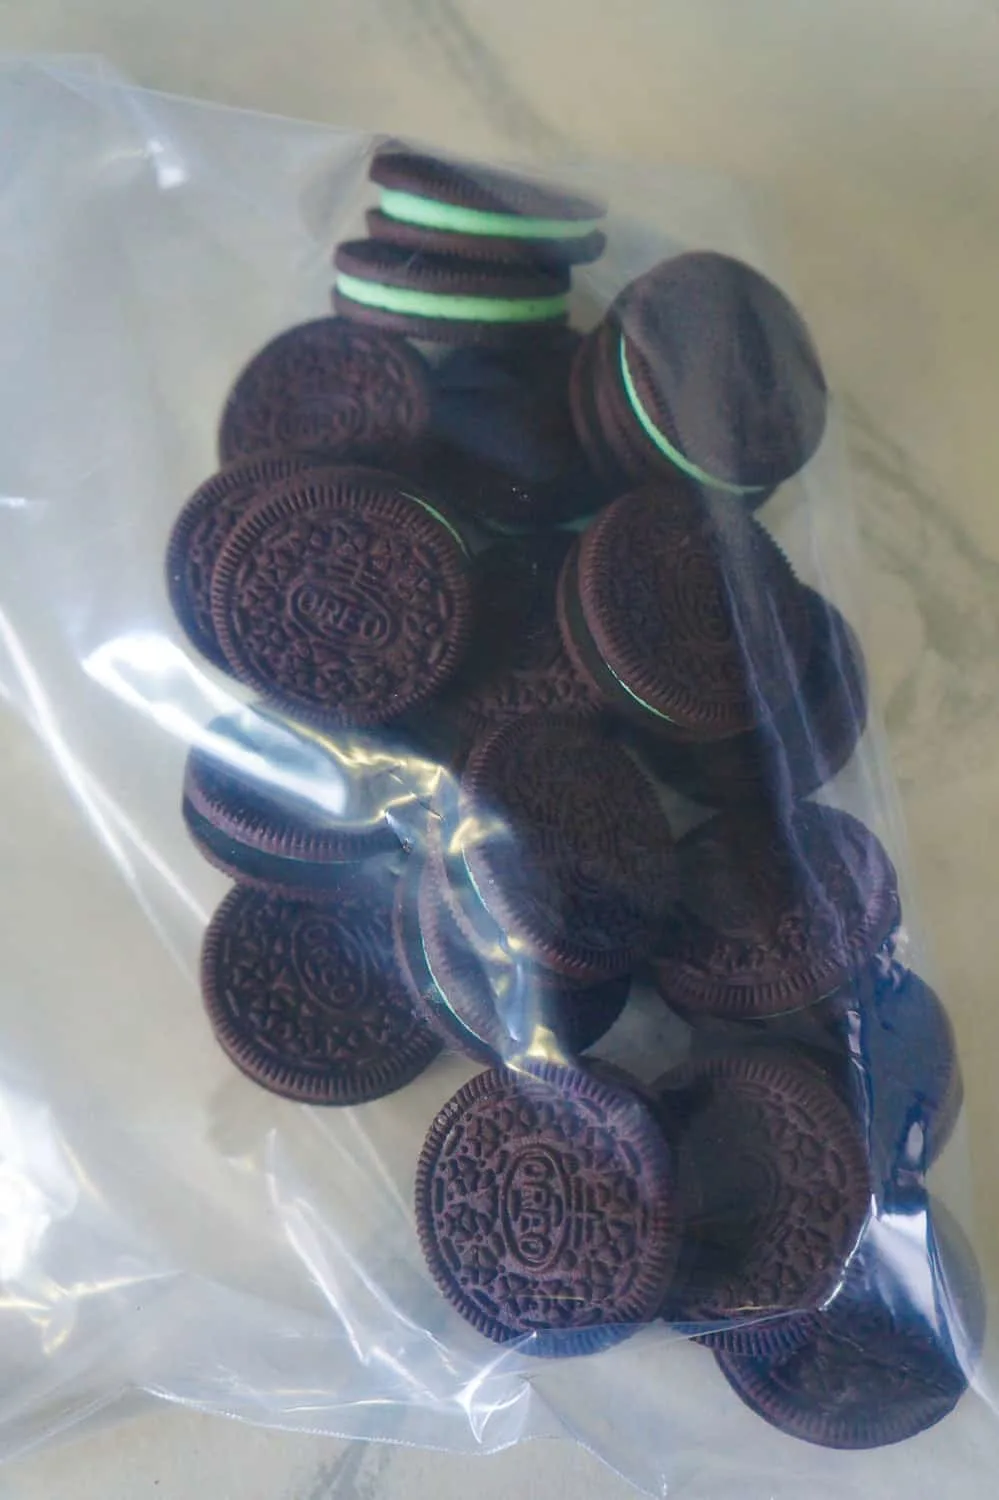 mint Oreo cookies in a Ziploc bag